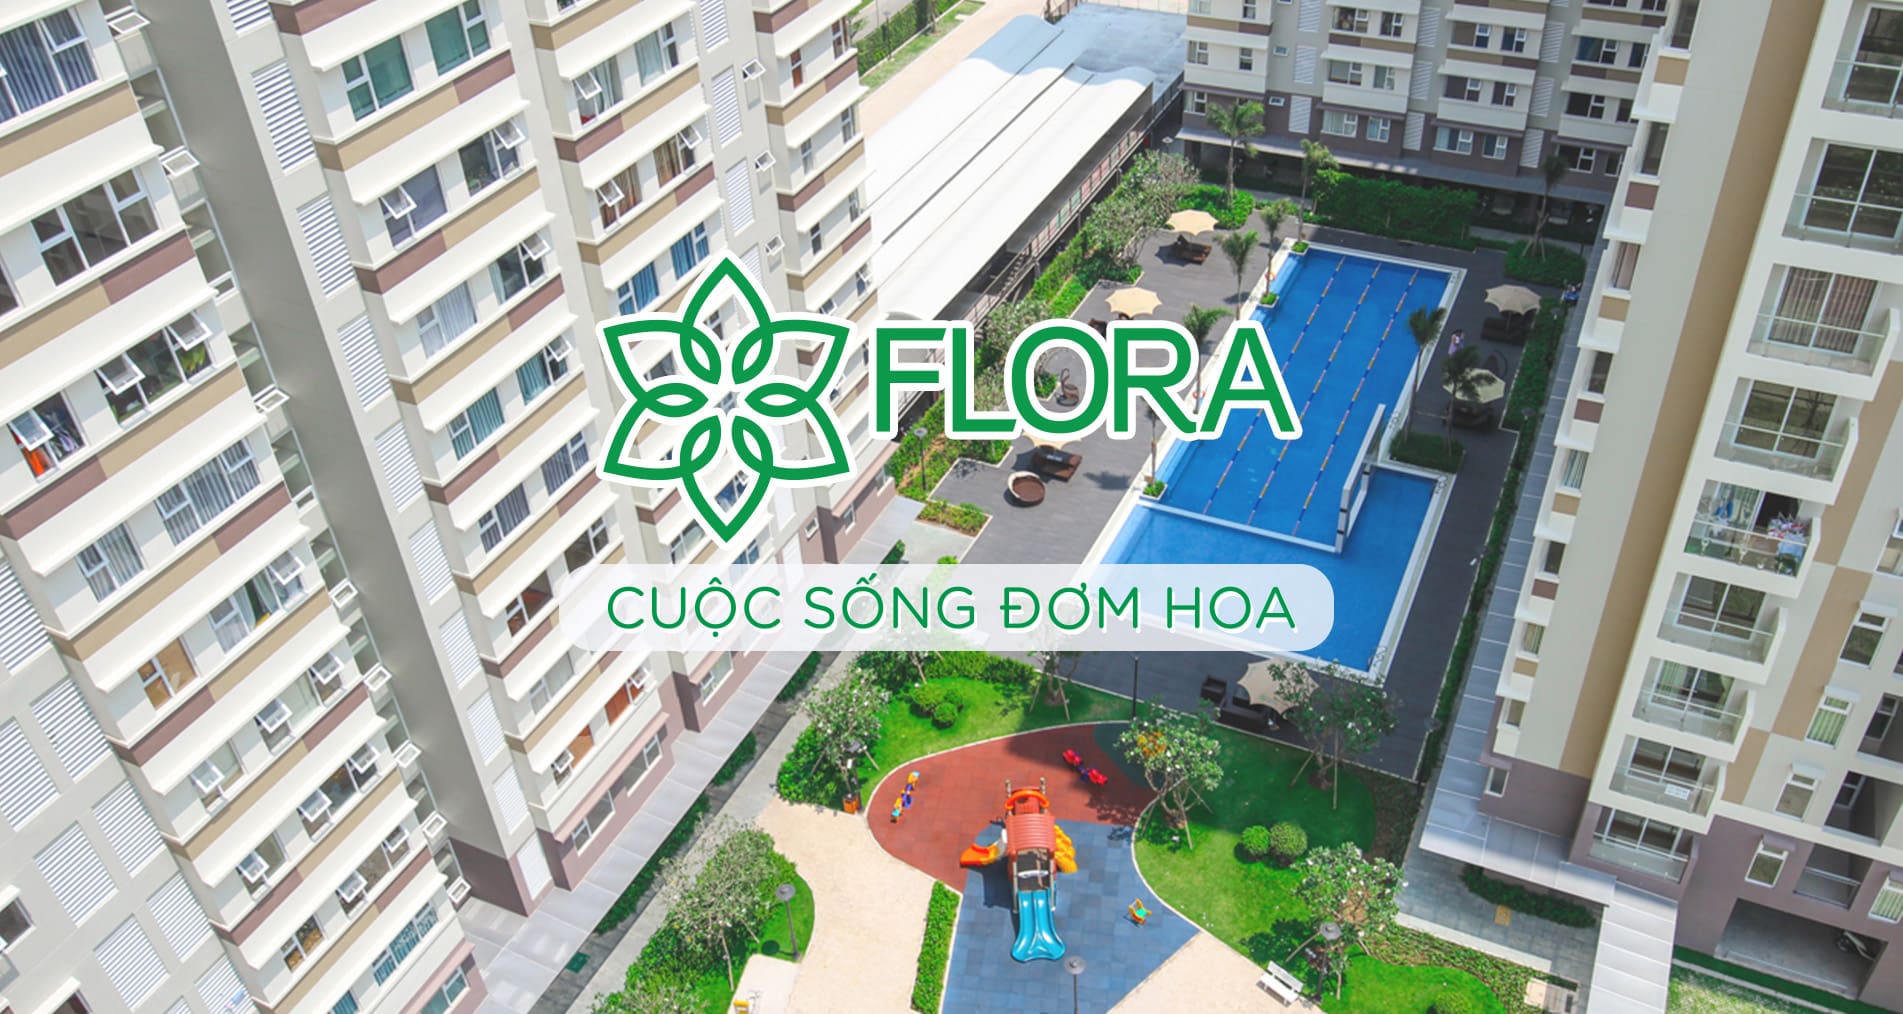 flora banner 1 - NAM LONG GROUP (NLG)